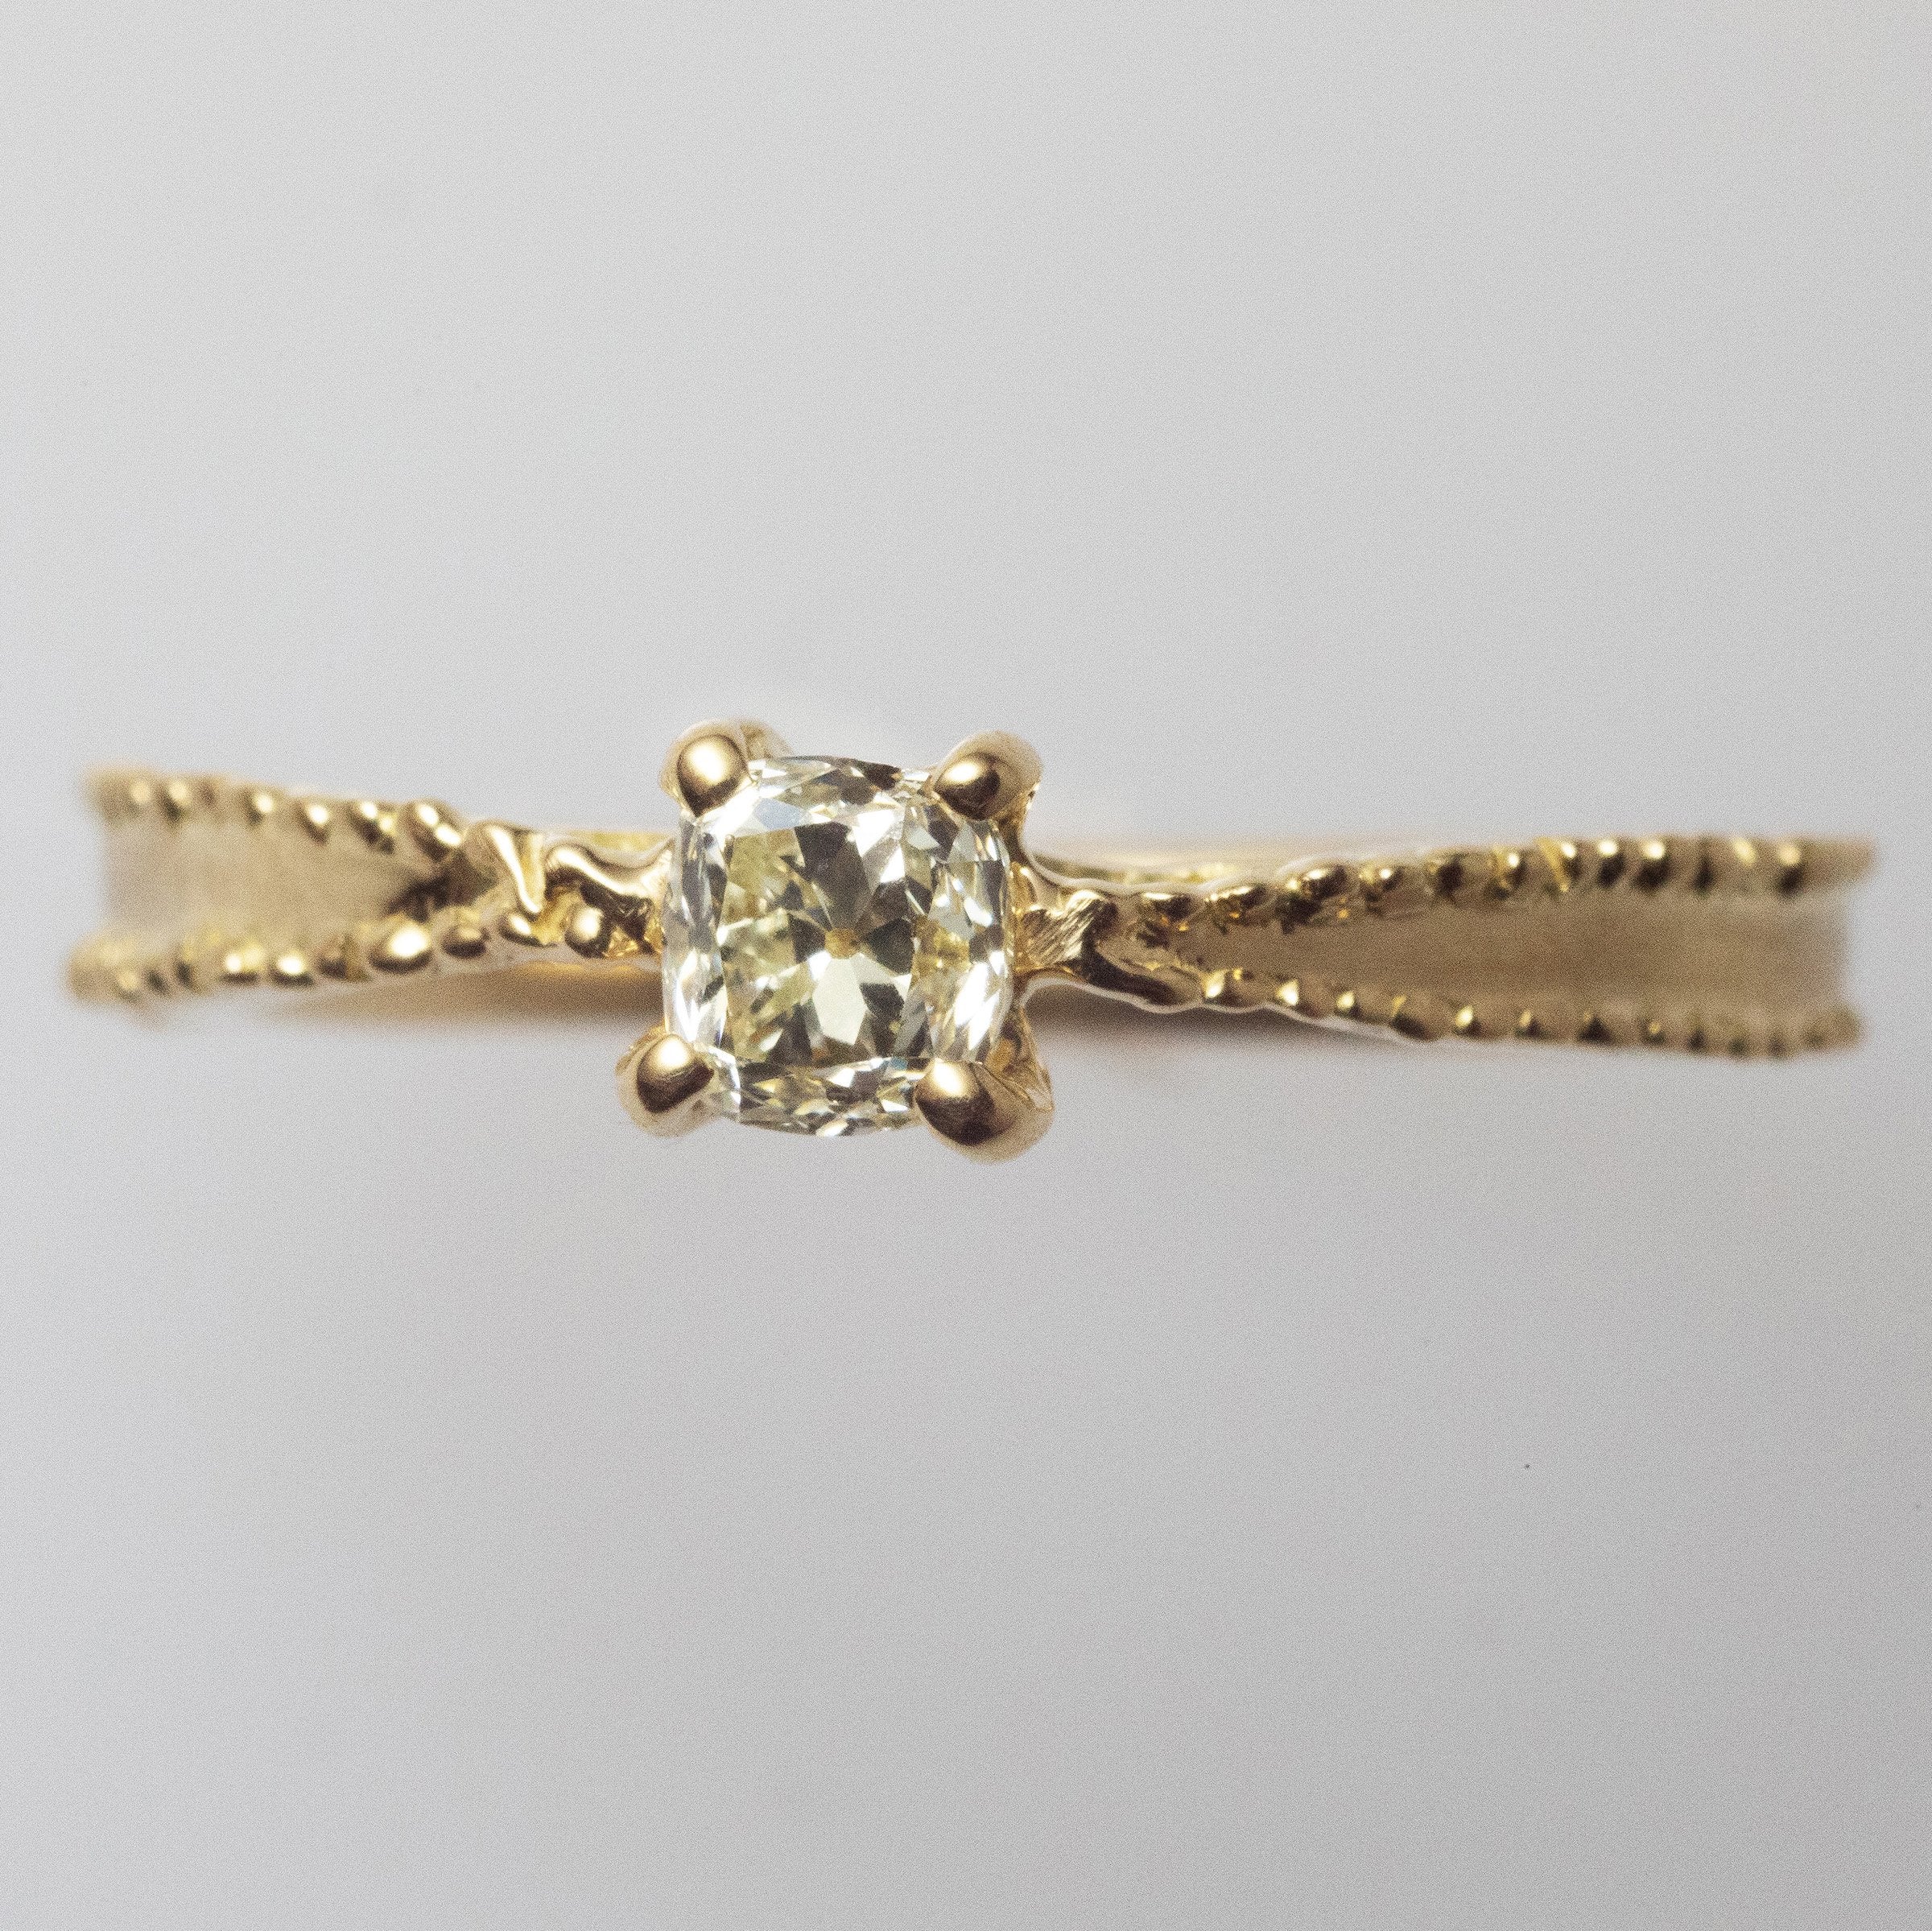 Melissa - Antique Diamond on 18k Milgrain-like Edged Ring